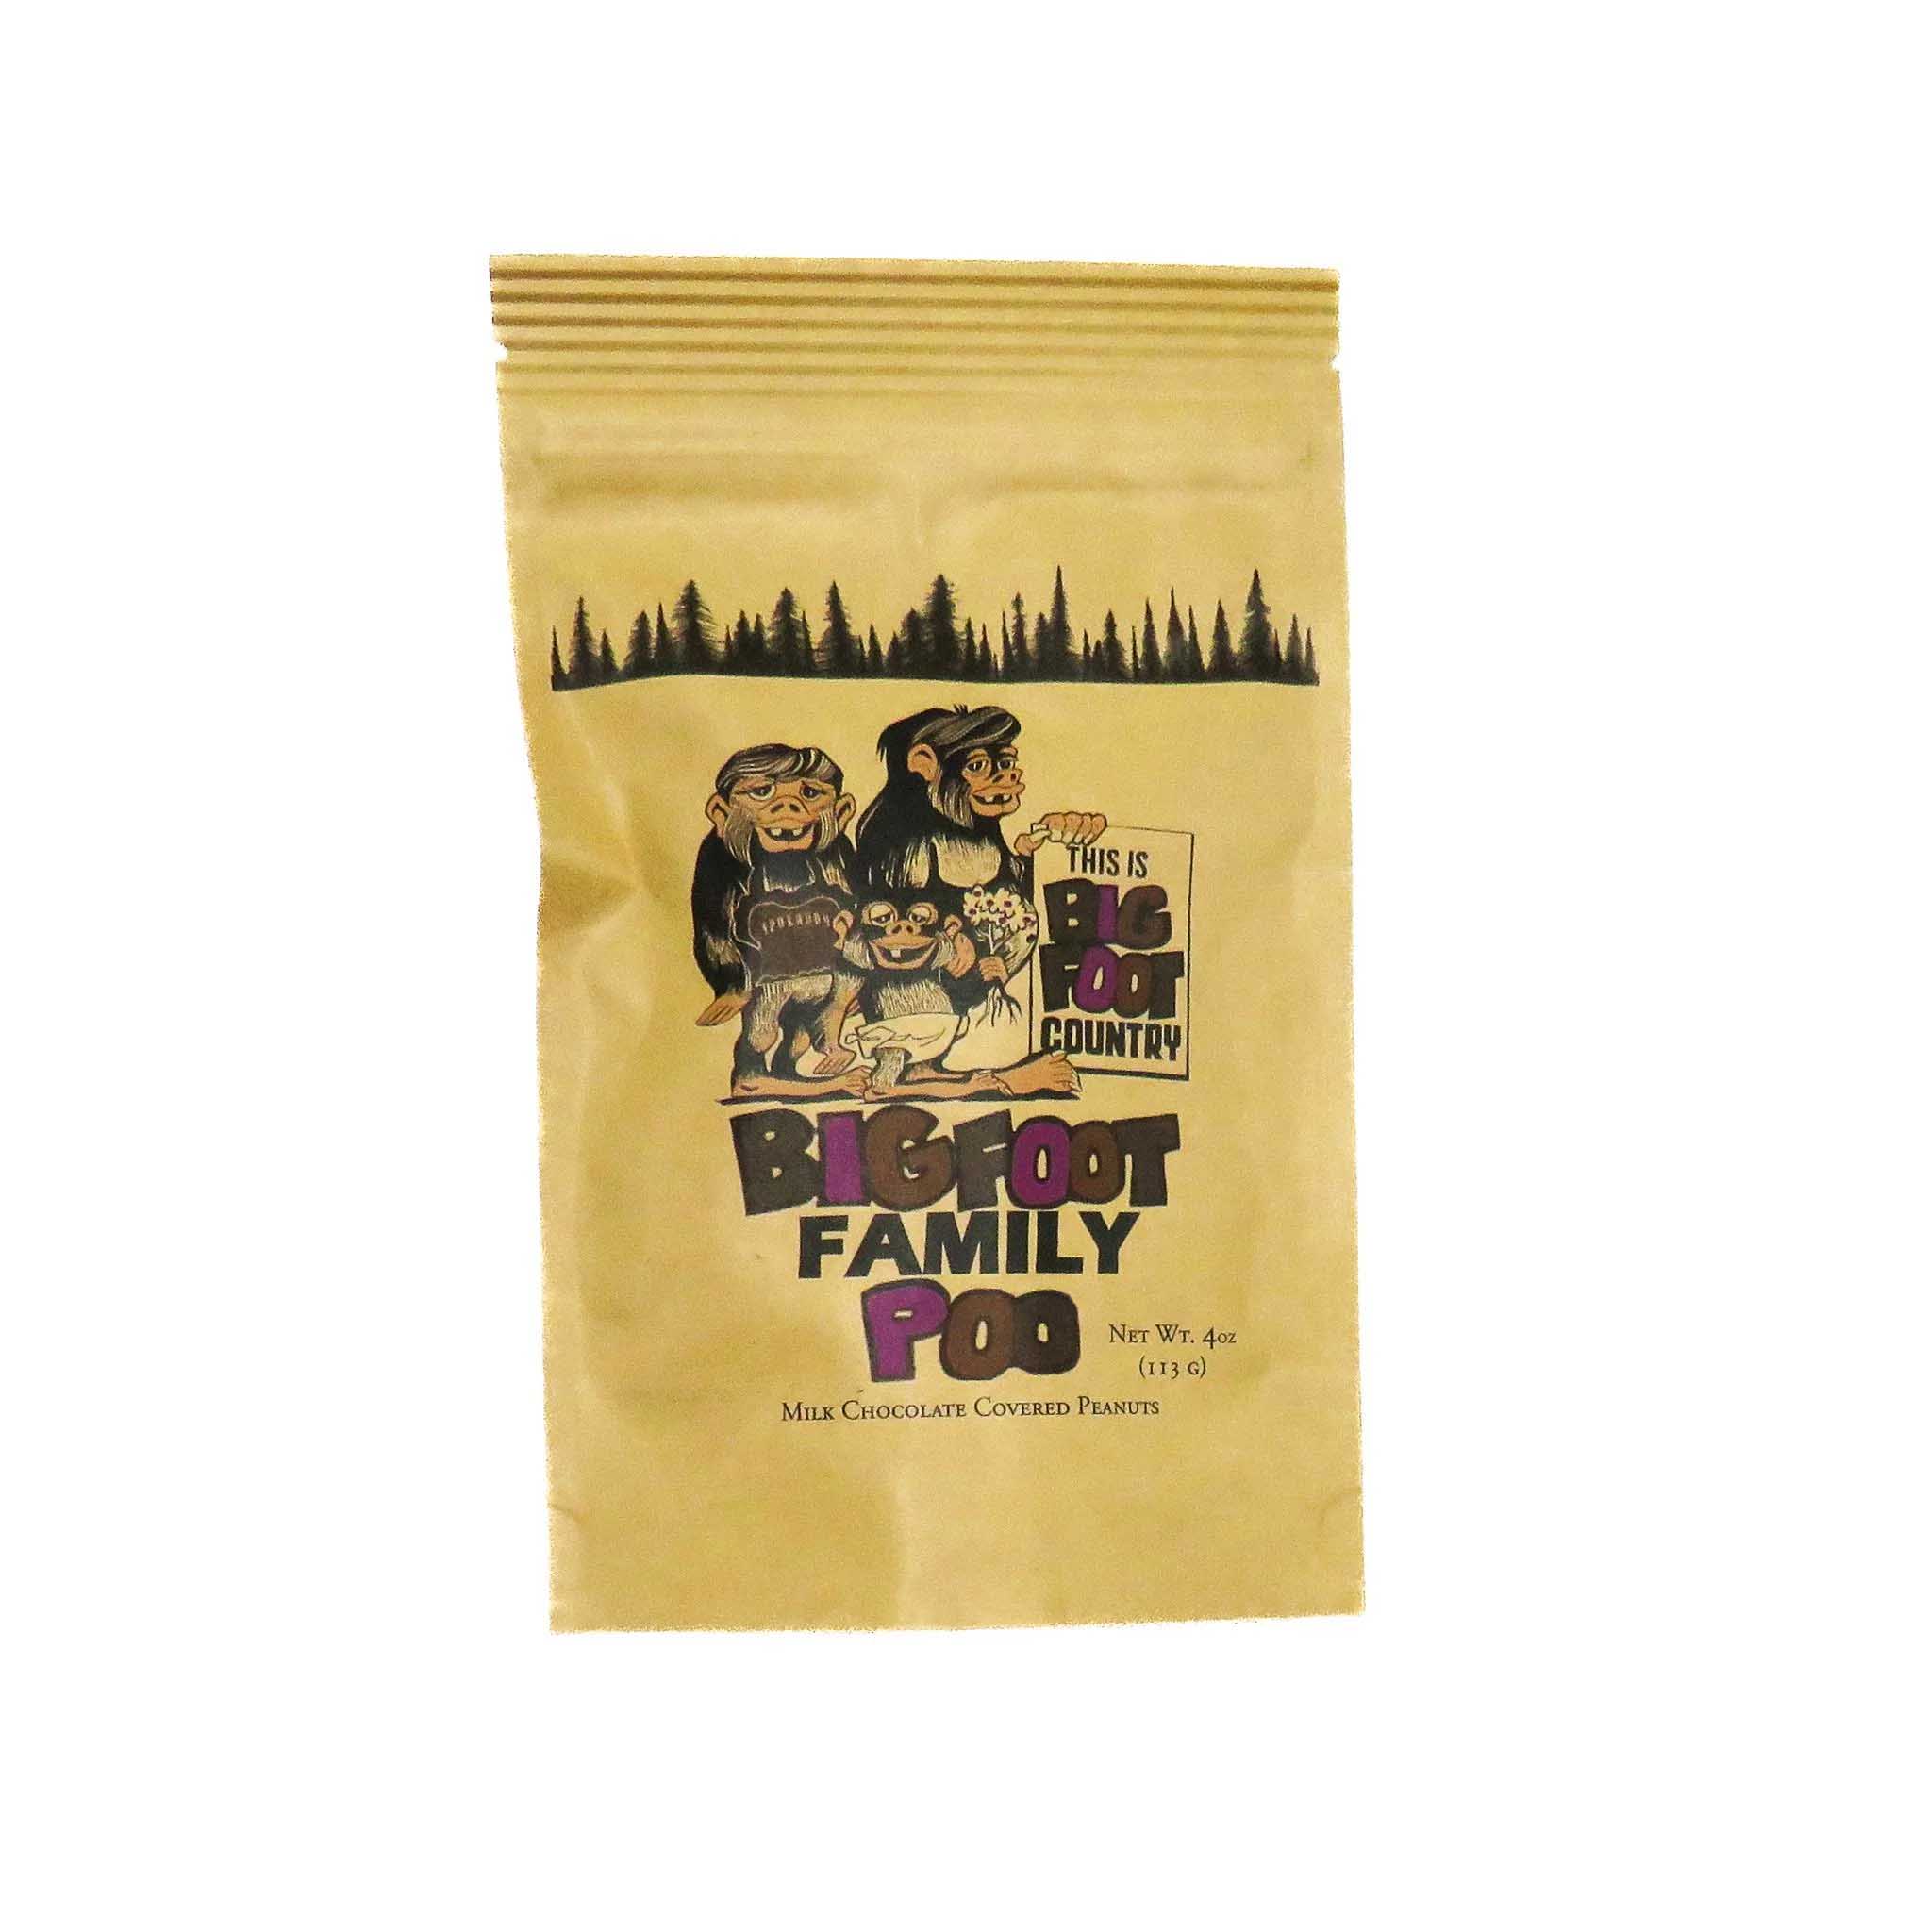 Bigfoot family poo milk chocolate coated peanuts bag.